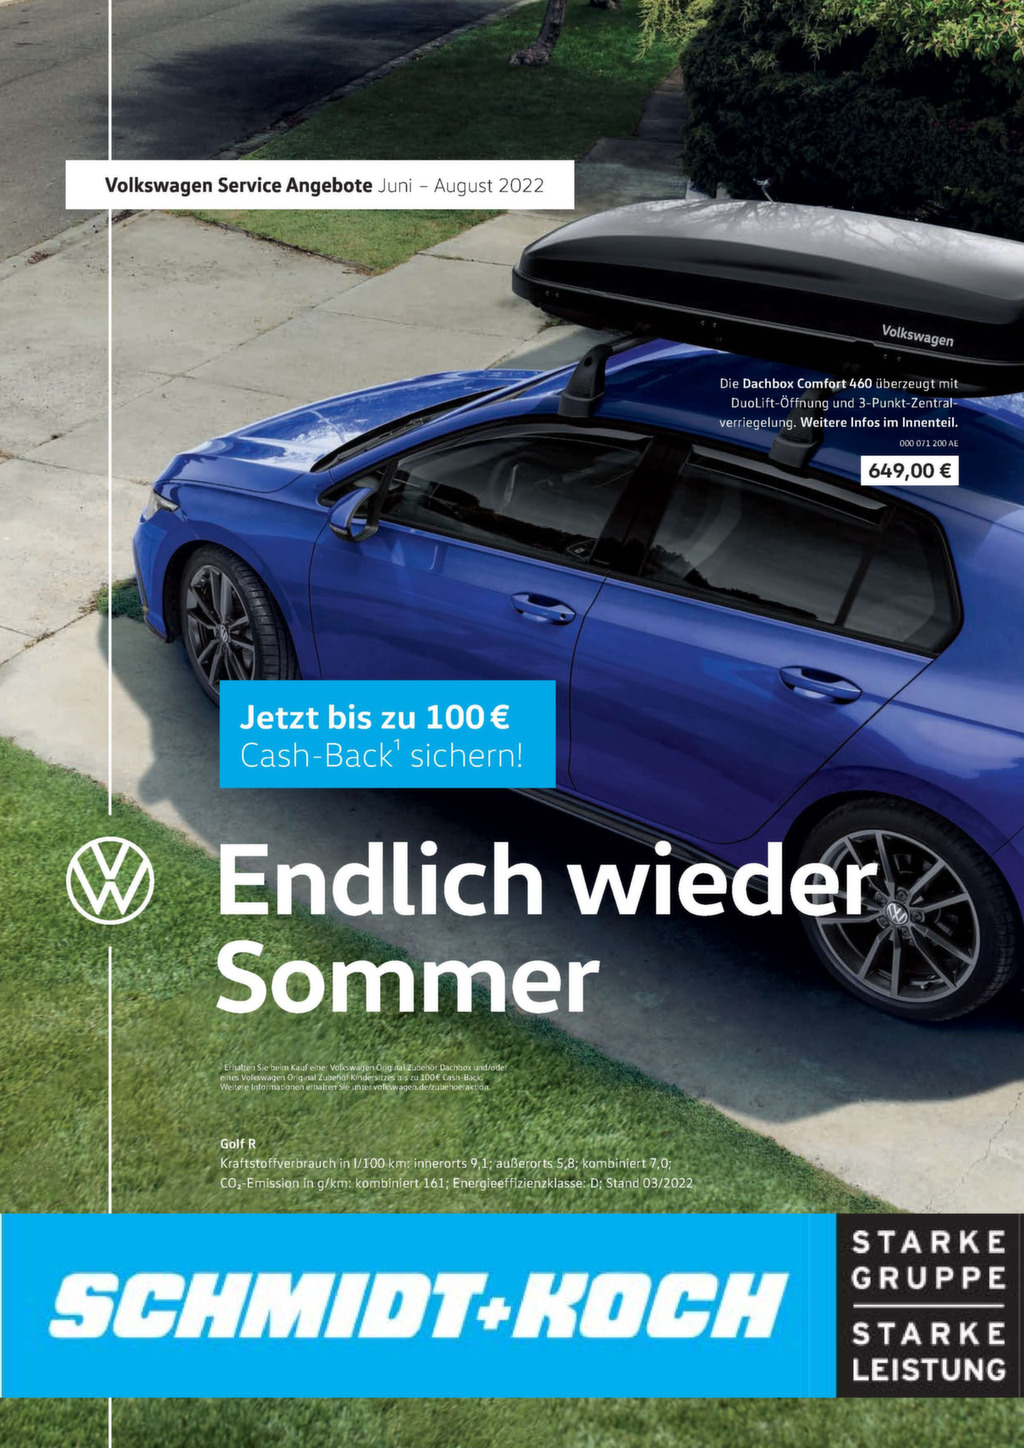 VW Service Angebote